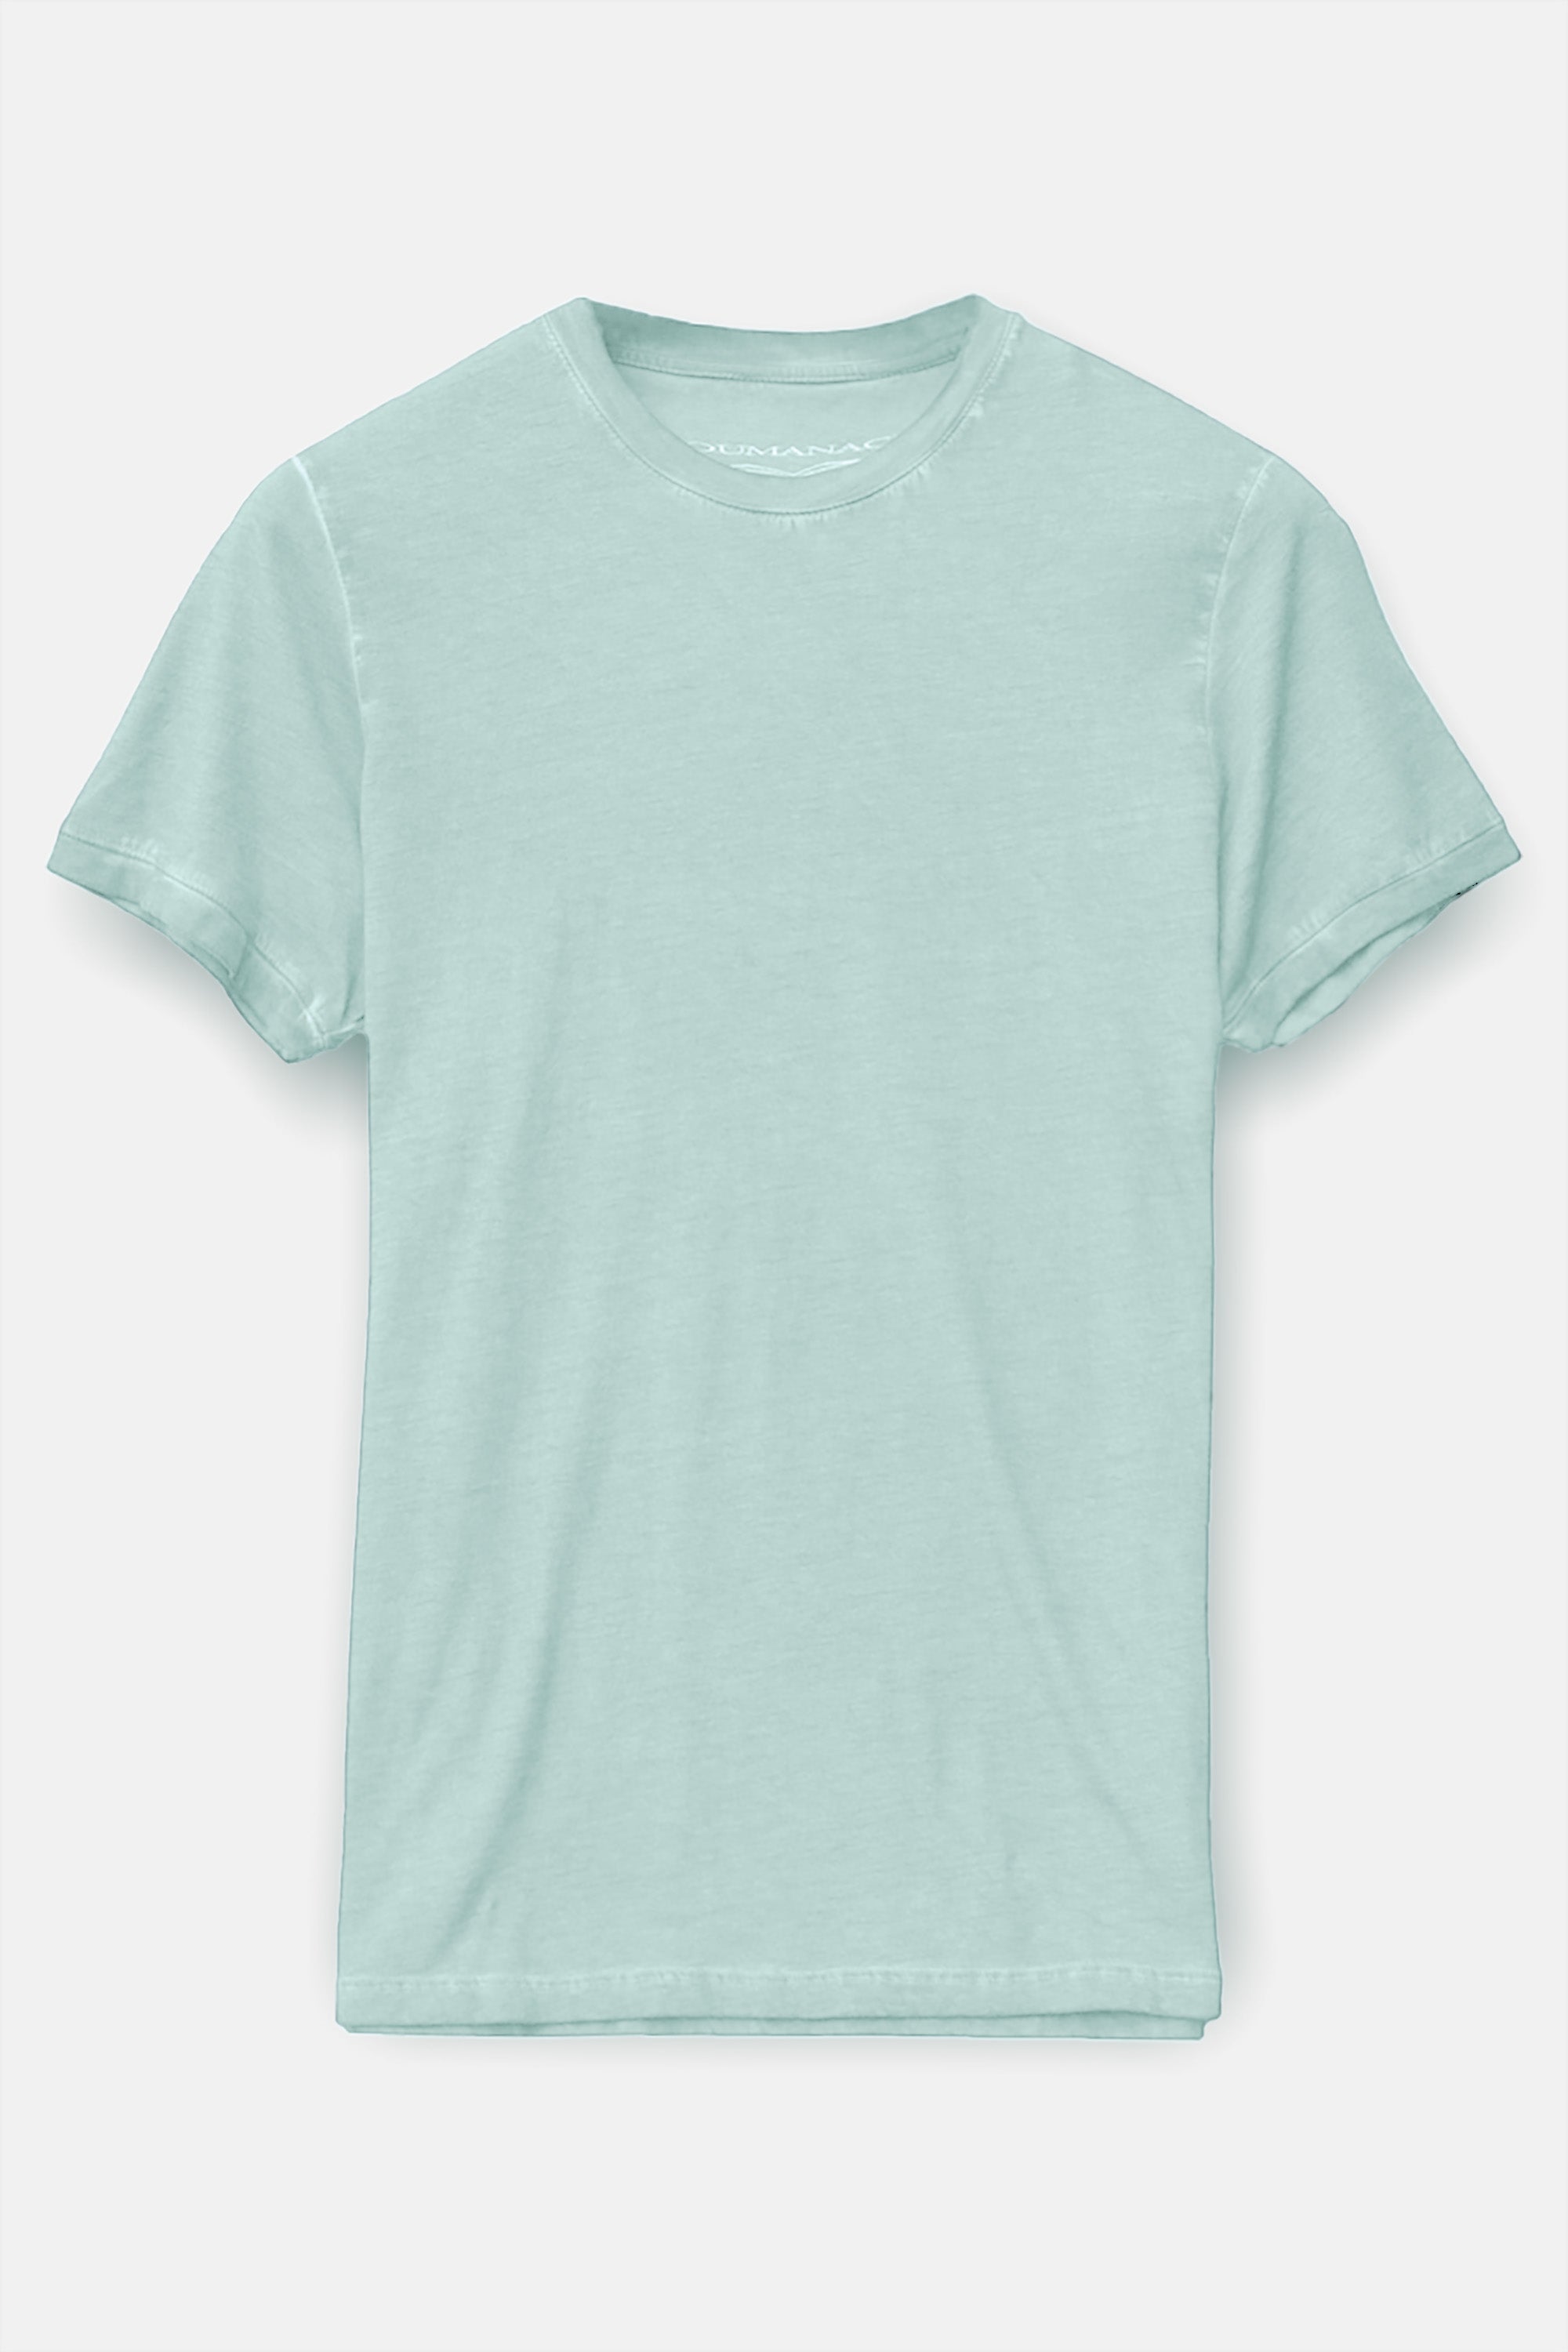 Smart Casual Cotton T-Shirt - Tahiti